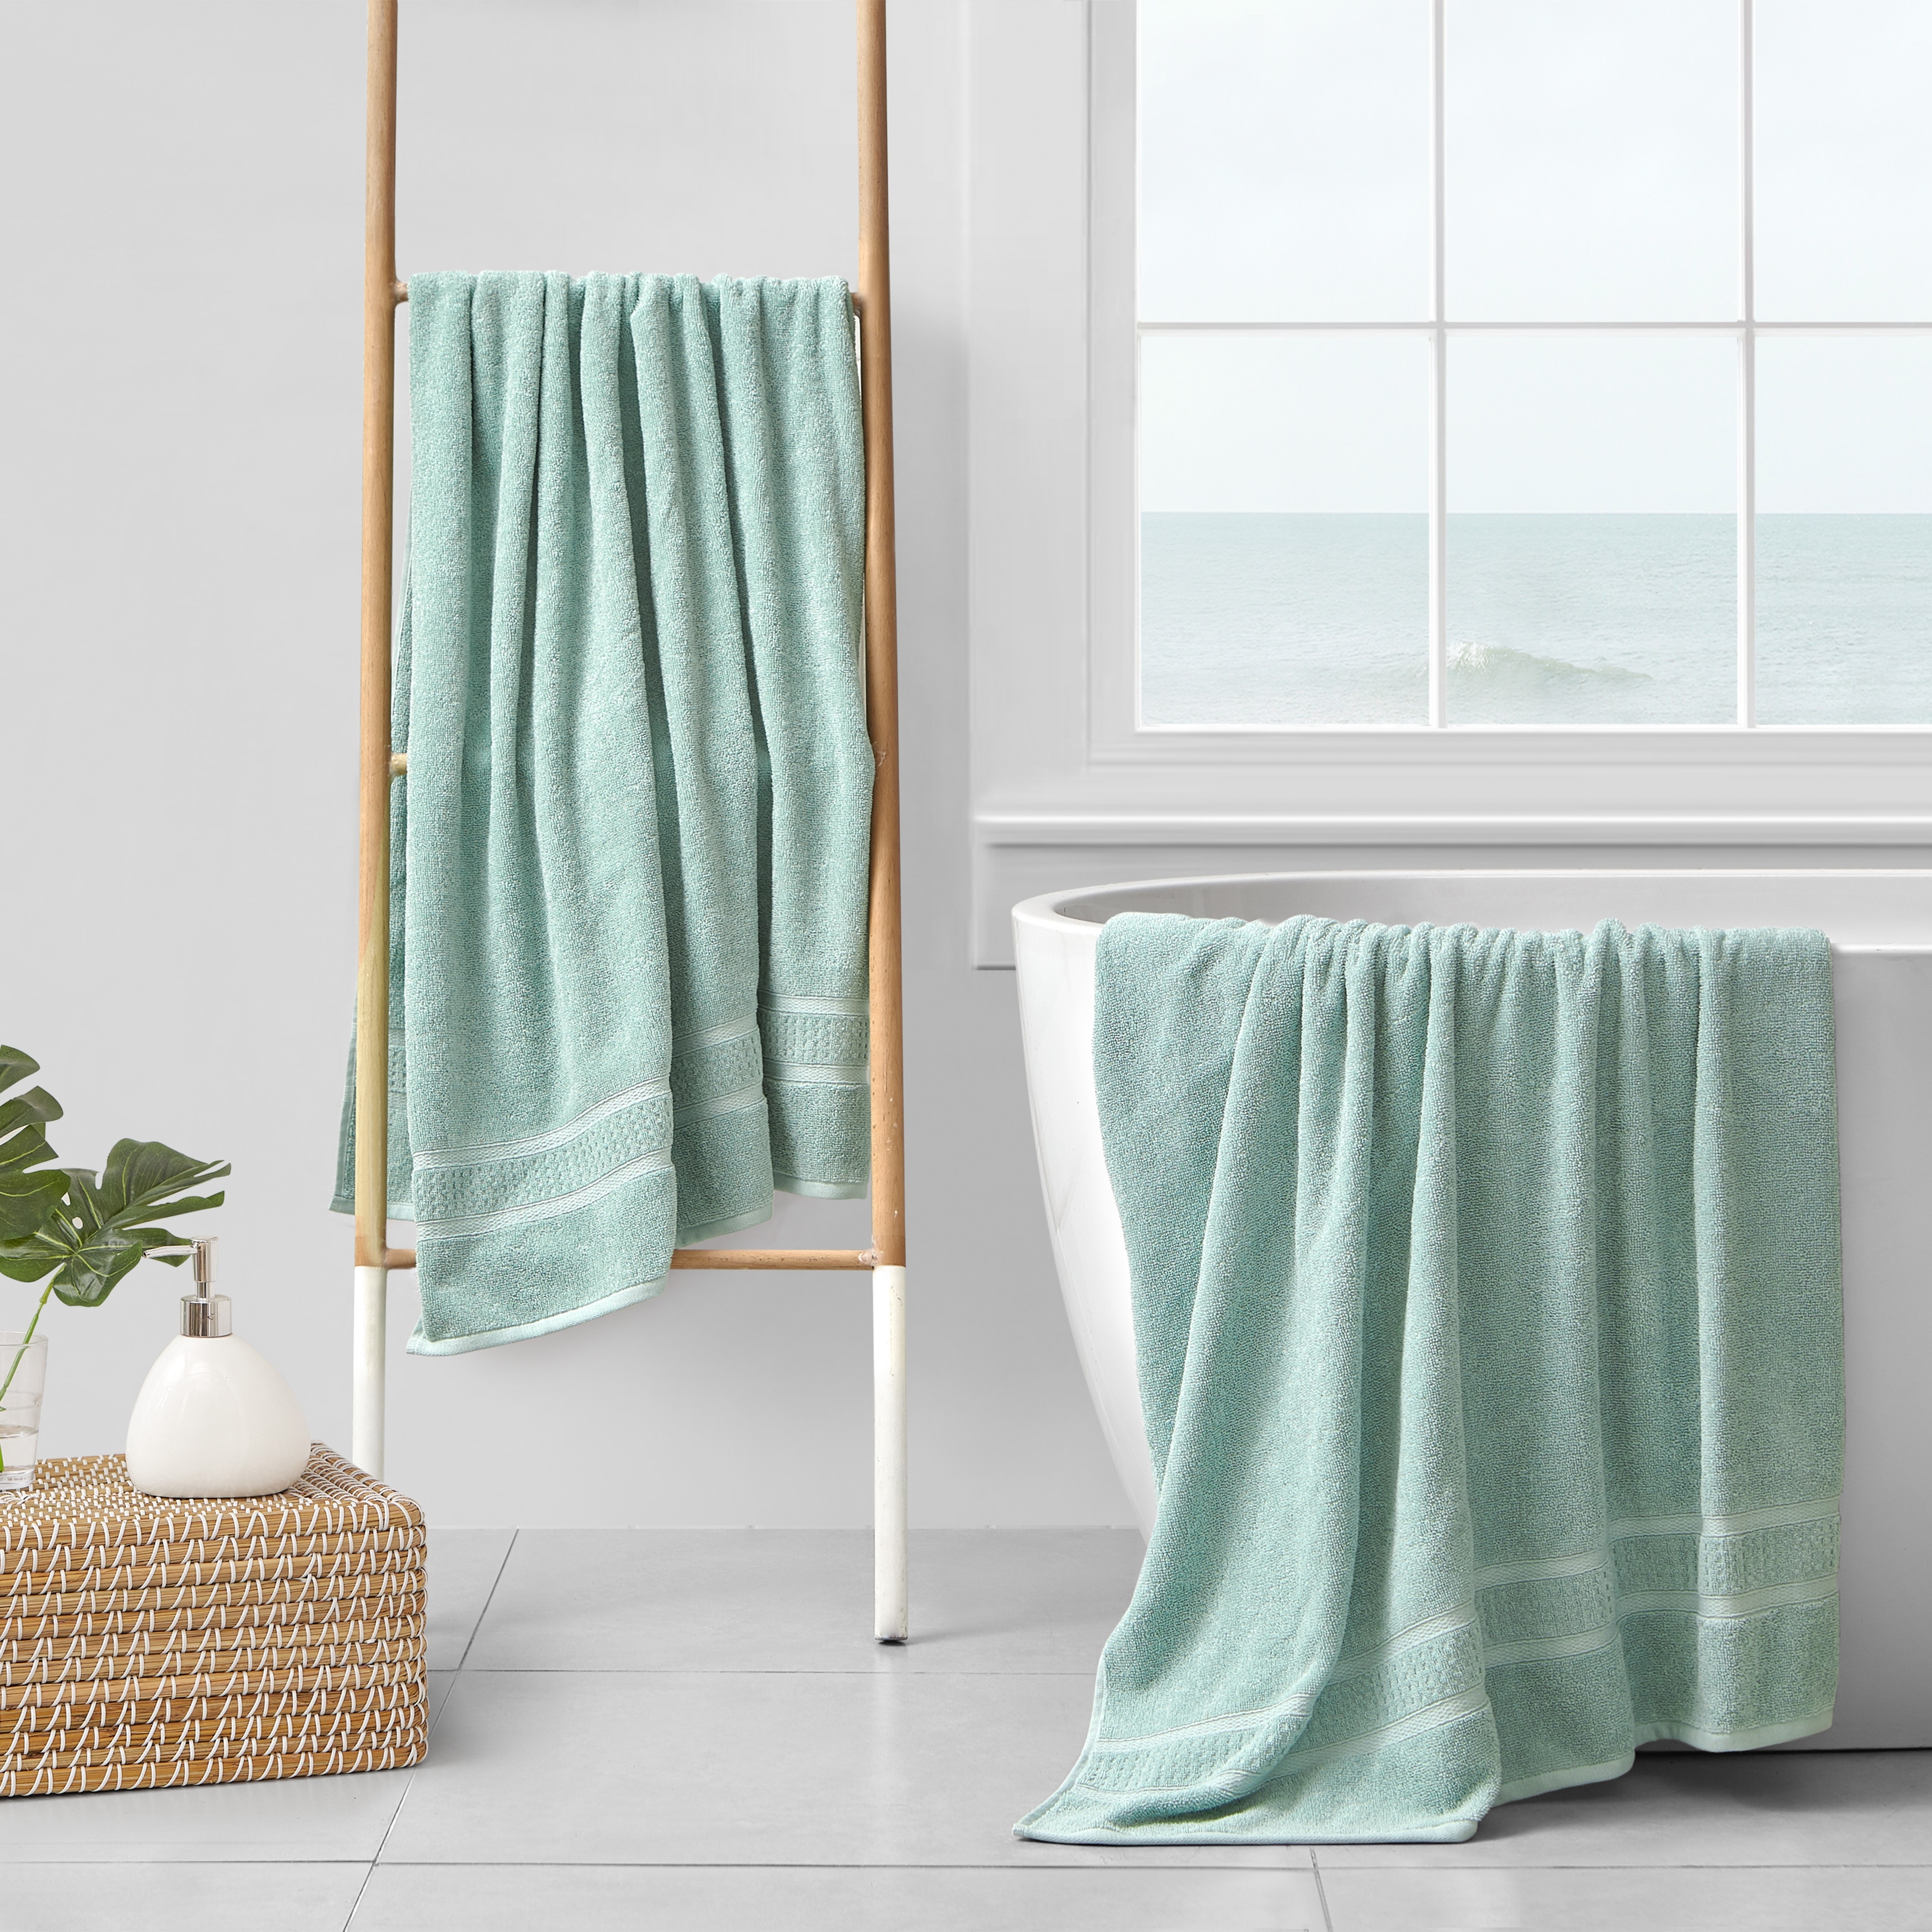 Nautica Oceane Towel Set 6 Piece - Turquoise